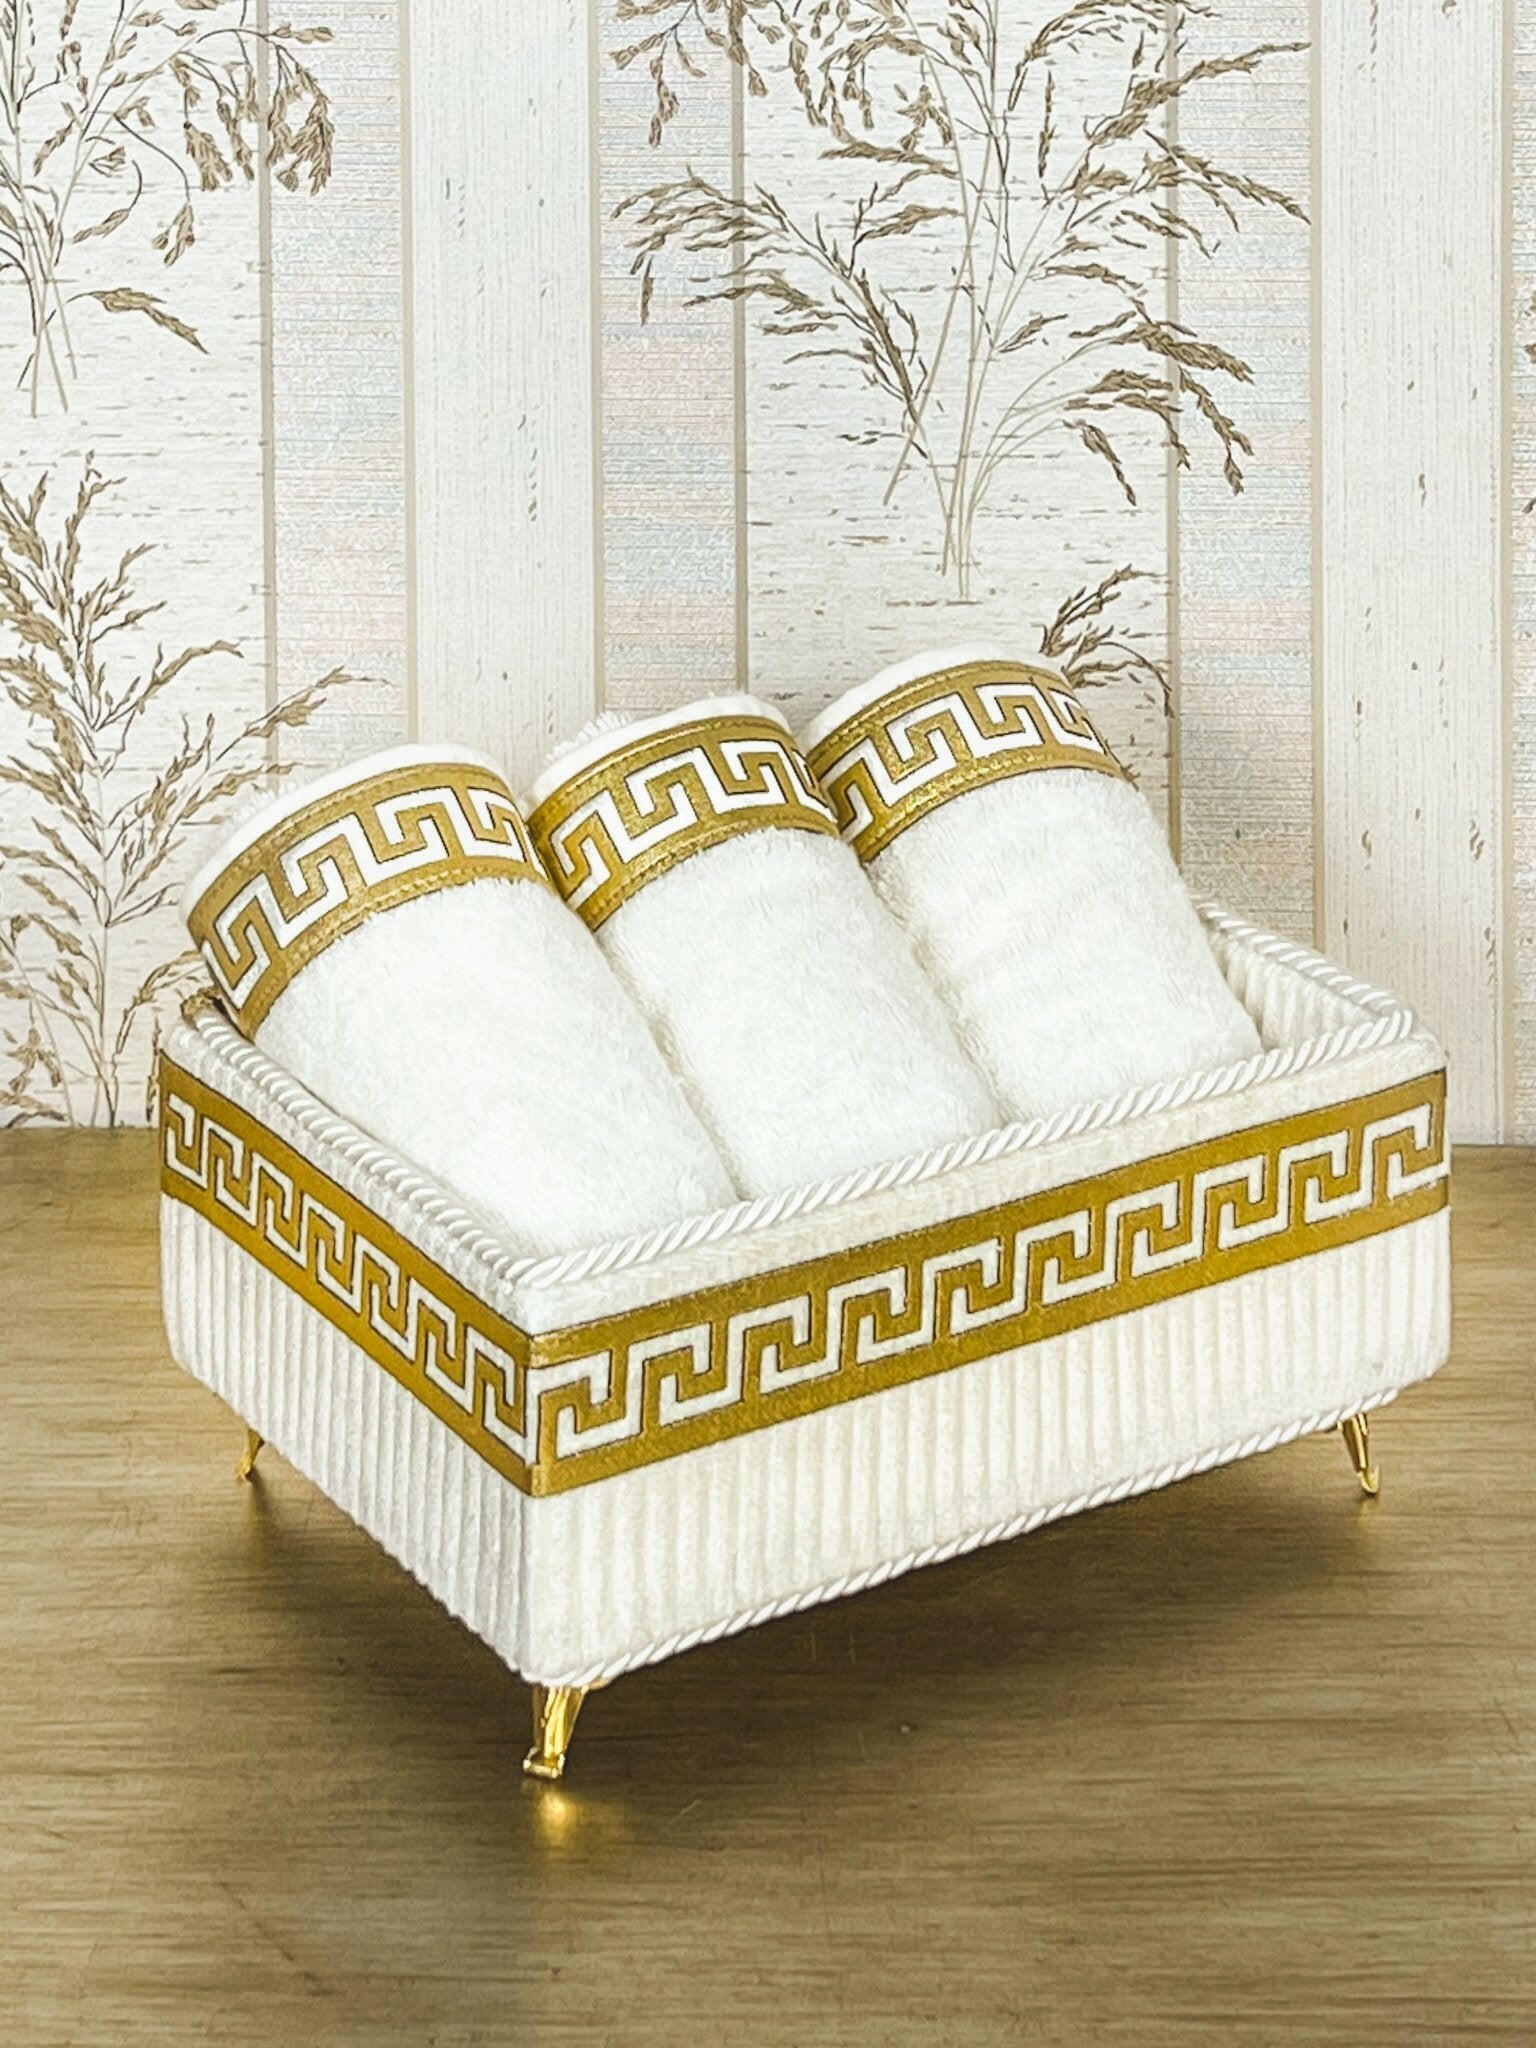 Anka Towel Box Set - Creative Home Designs, Cream & Gold Bathroom Towel Box, Versace Style Greek Key Patterned Cream & Gold Bathroom Decor, Bamboo Cream & Gold Luxury Turkish Towels